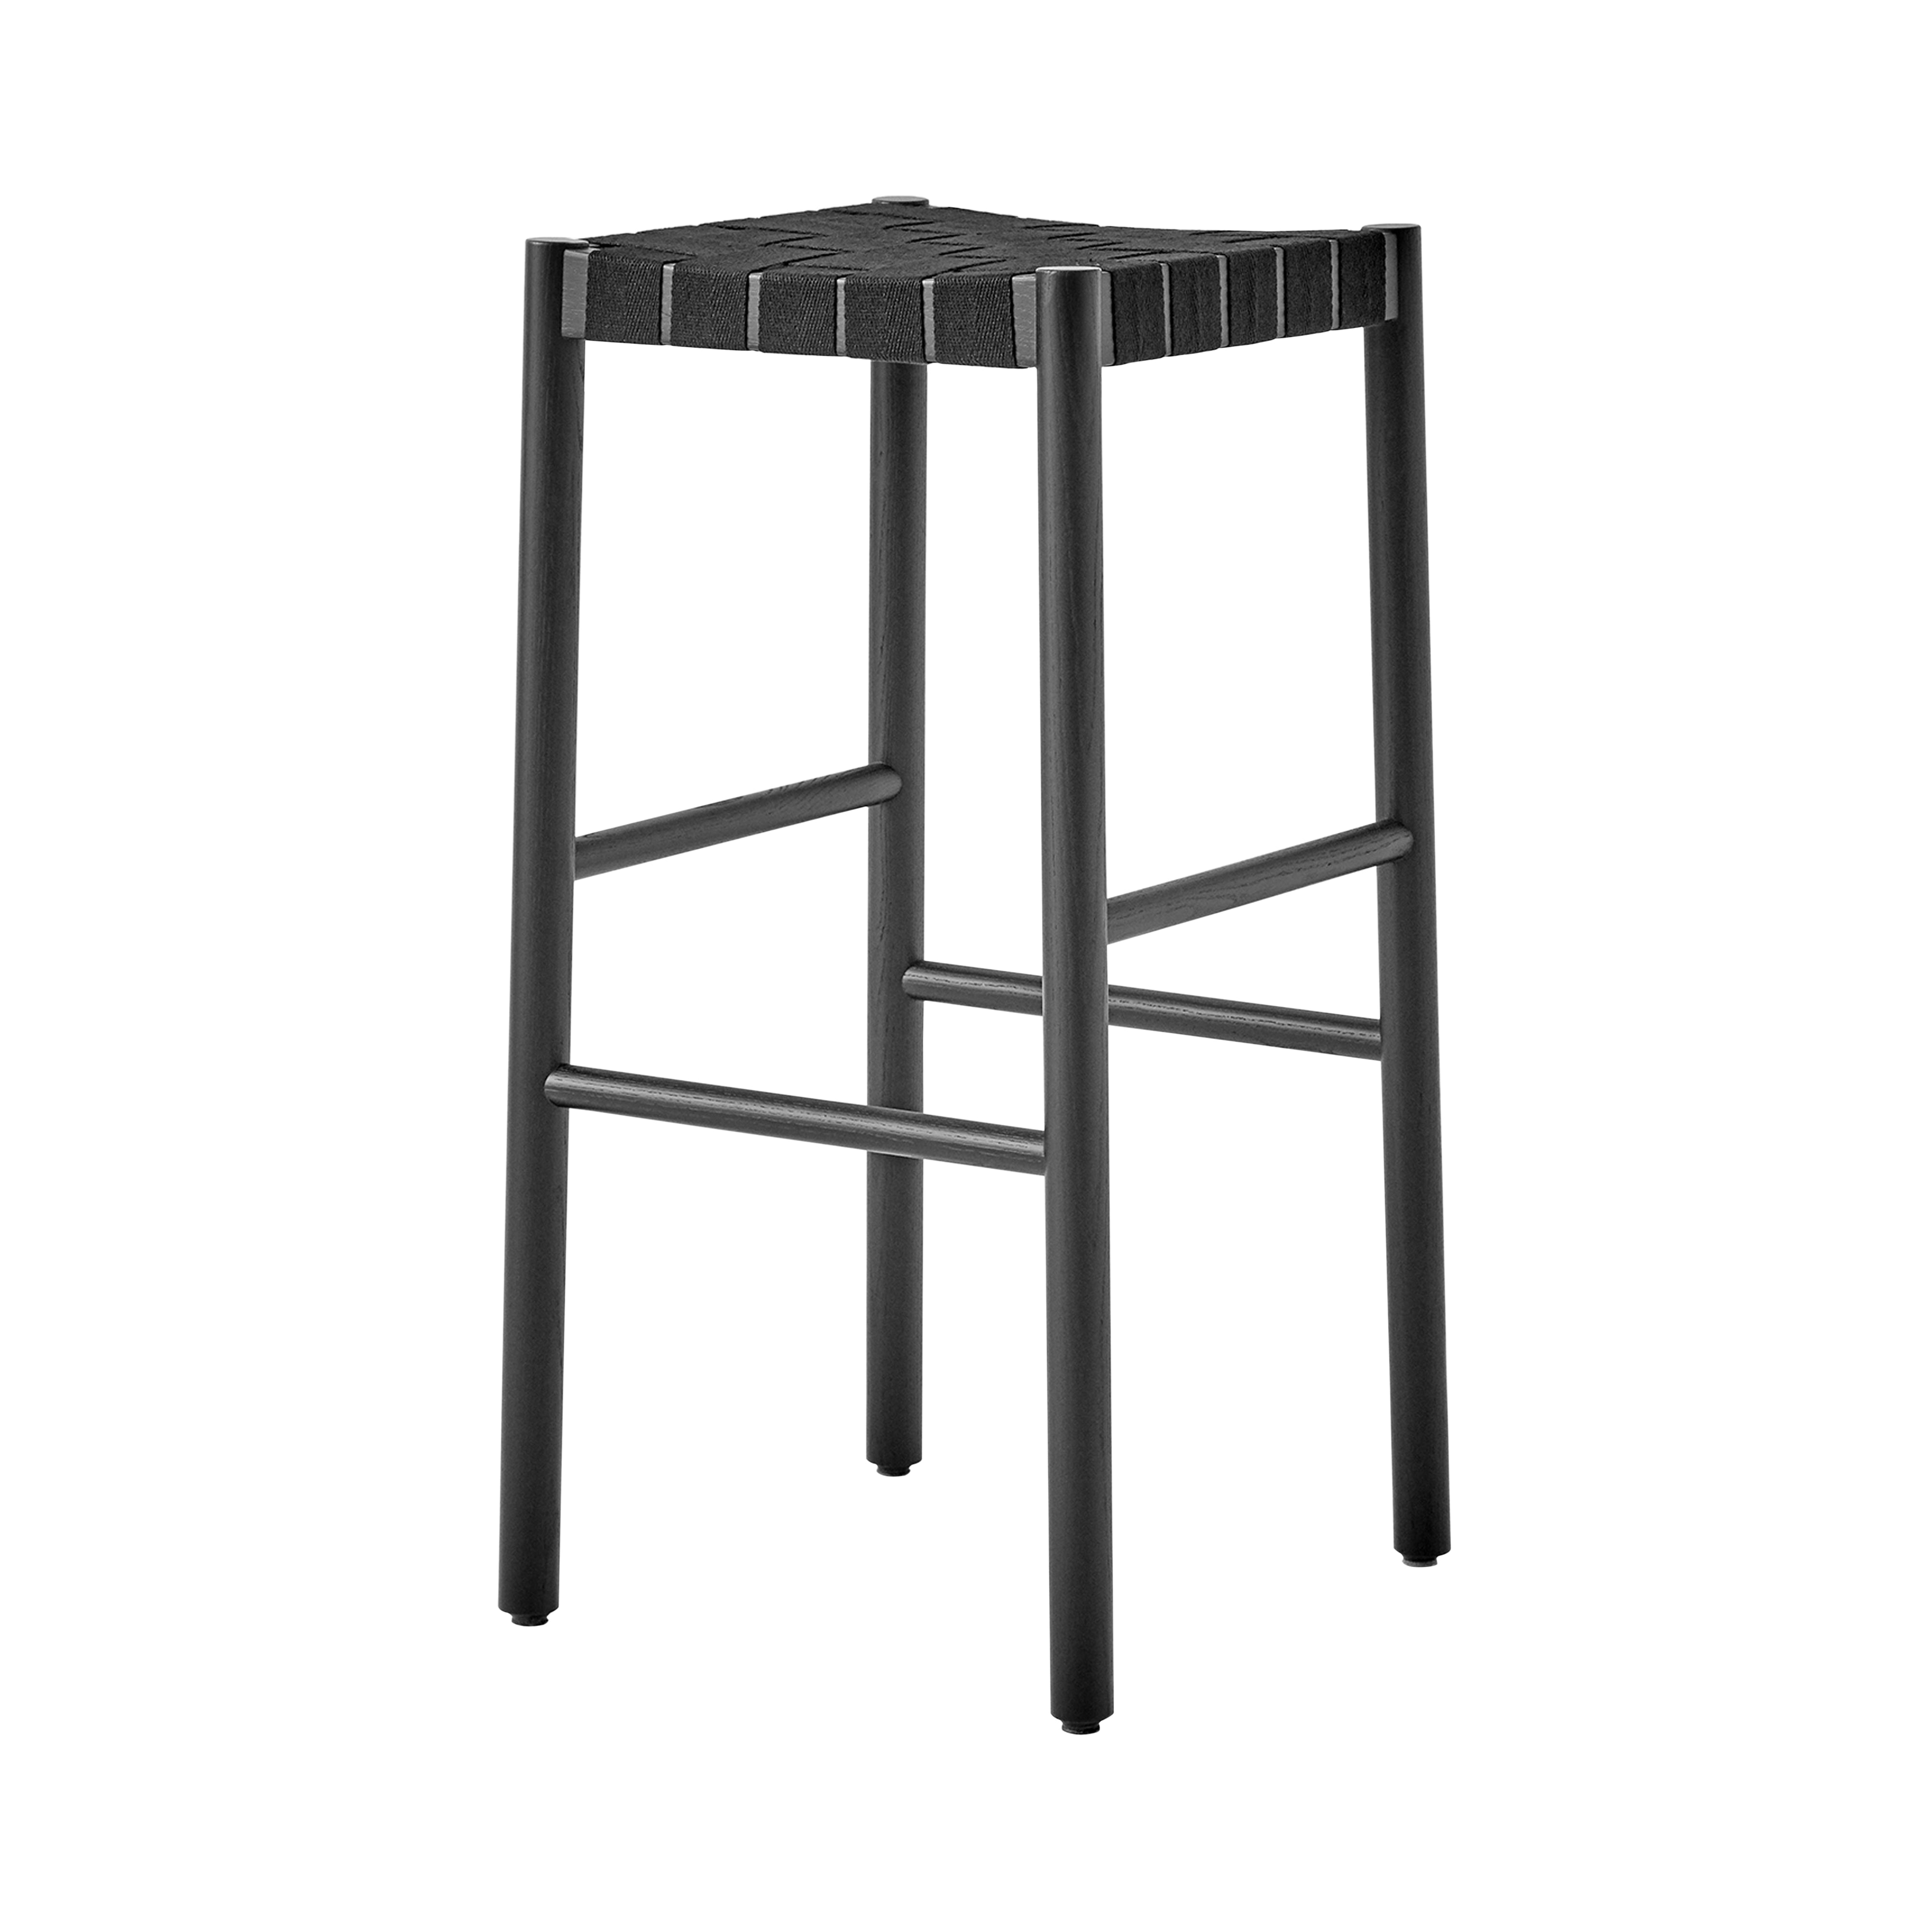 Betty Bar + Counter Chair: TK7 + TK8 + Bar (TK8) + Black + Black